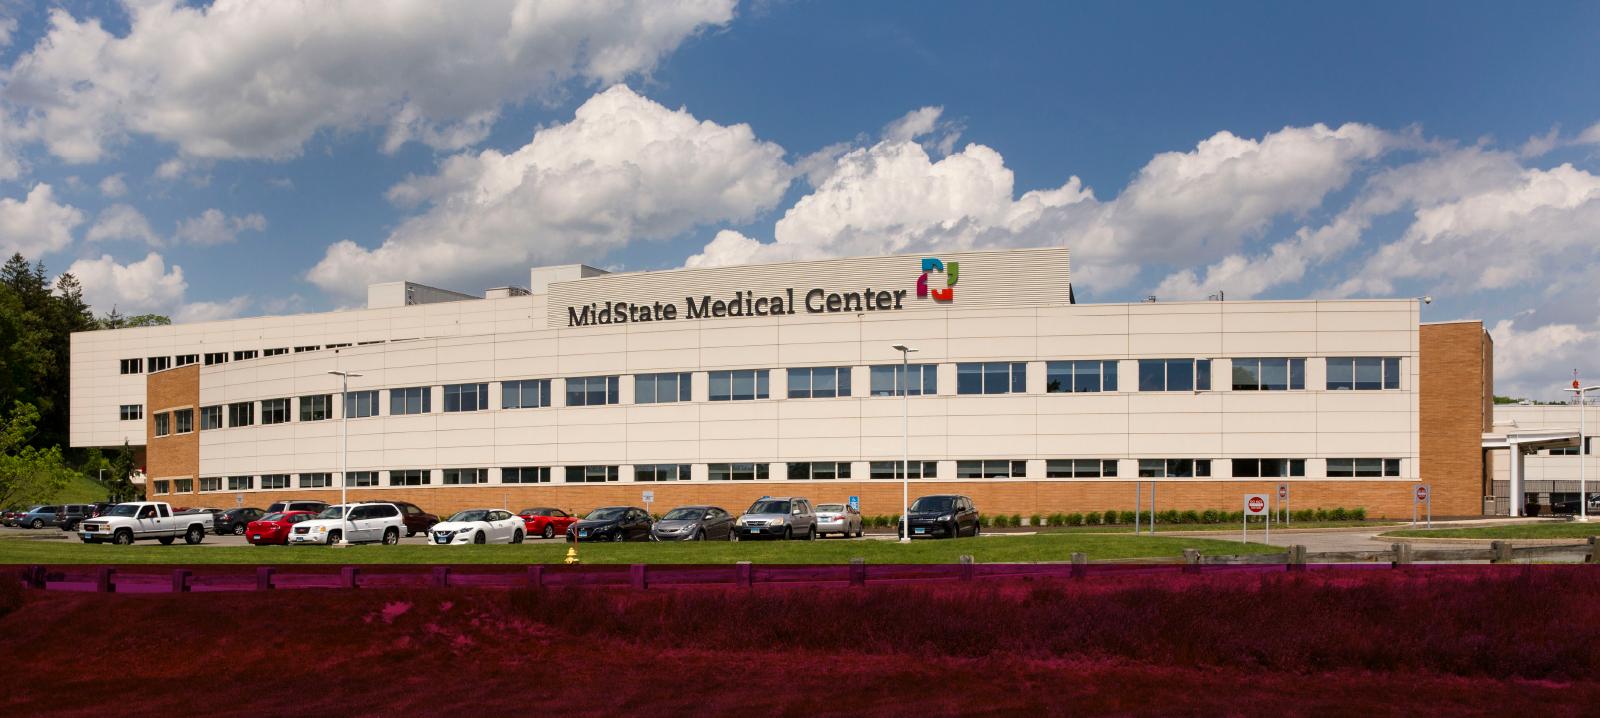 MidState Medical Center